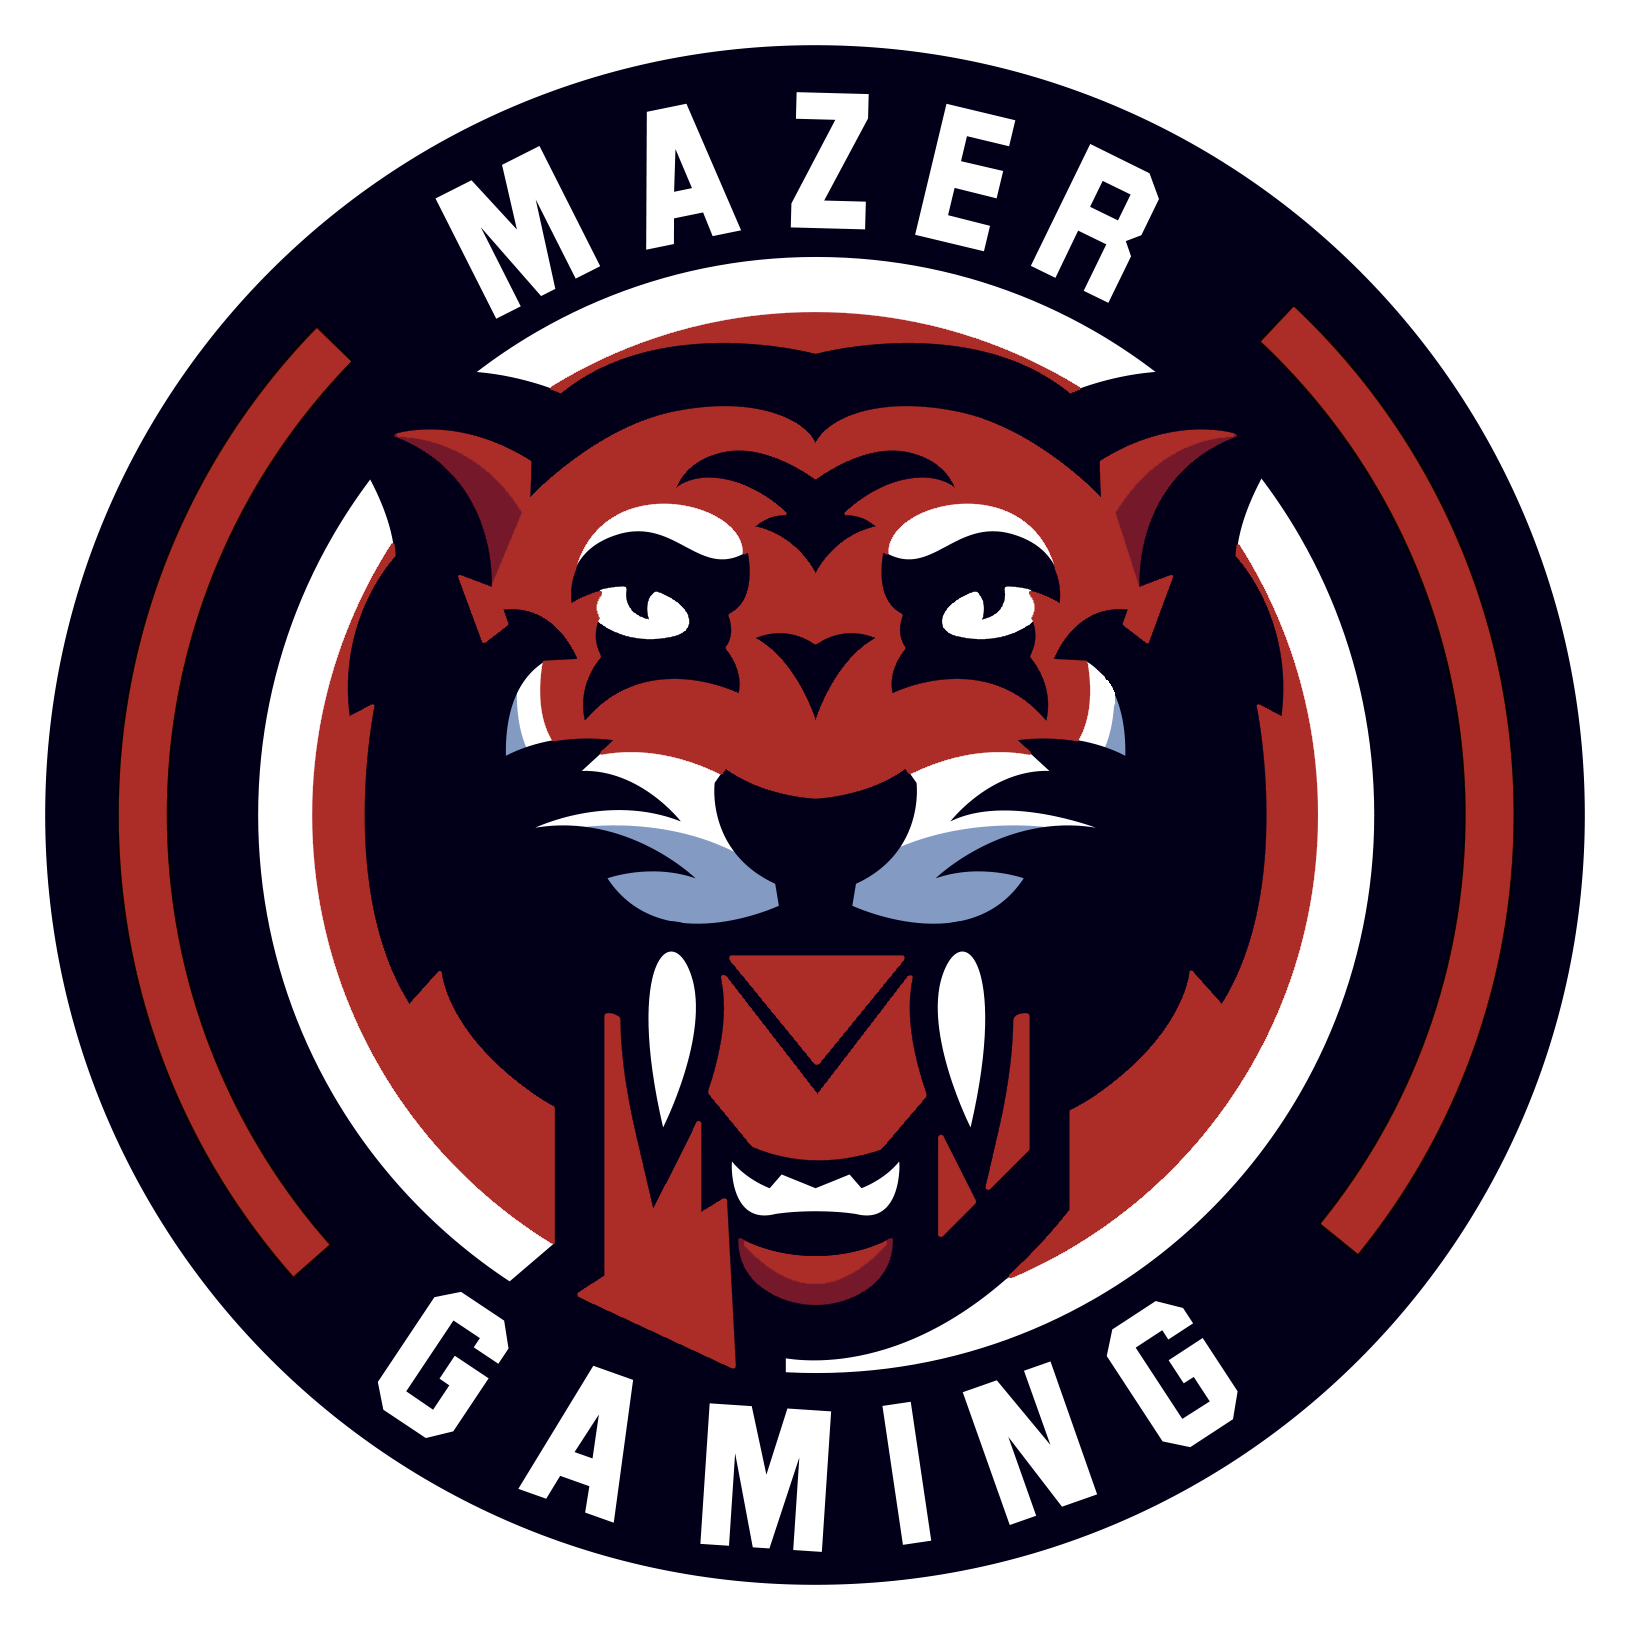 Mazer Gaminglogo square.png